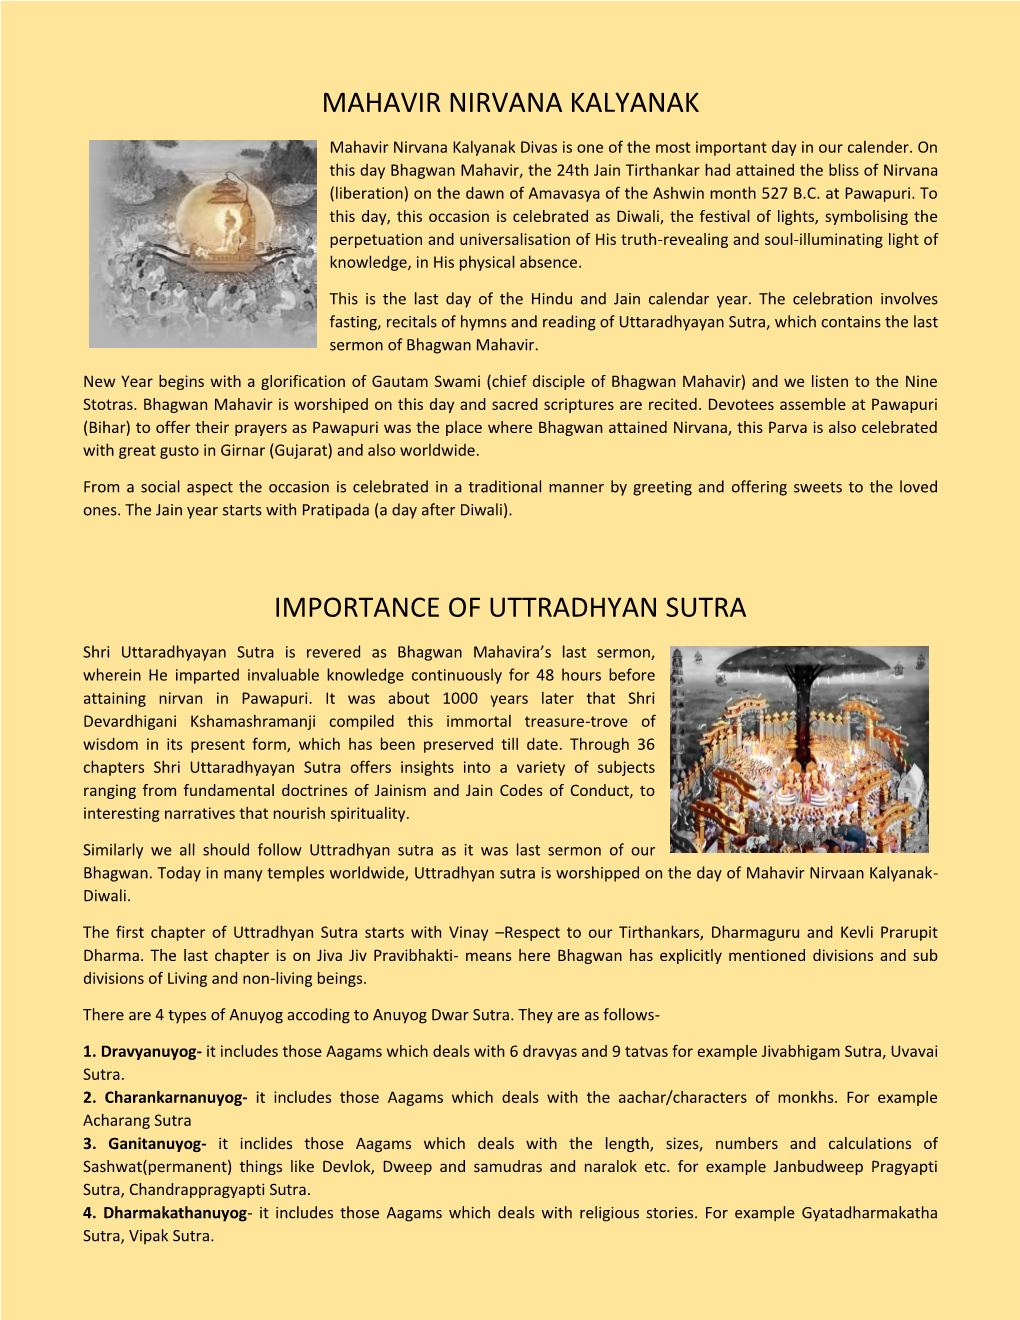 Mahavir Nirvana Kalyanak Importance of Uttradhyan